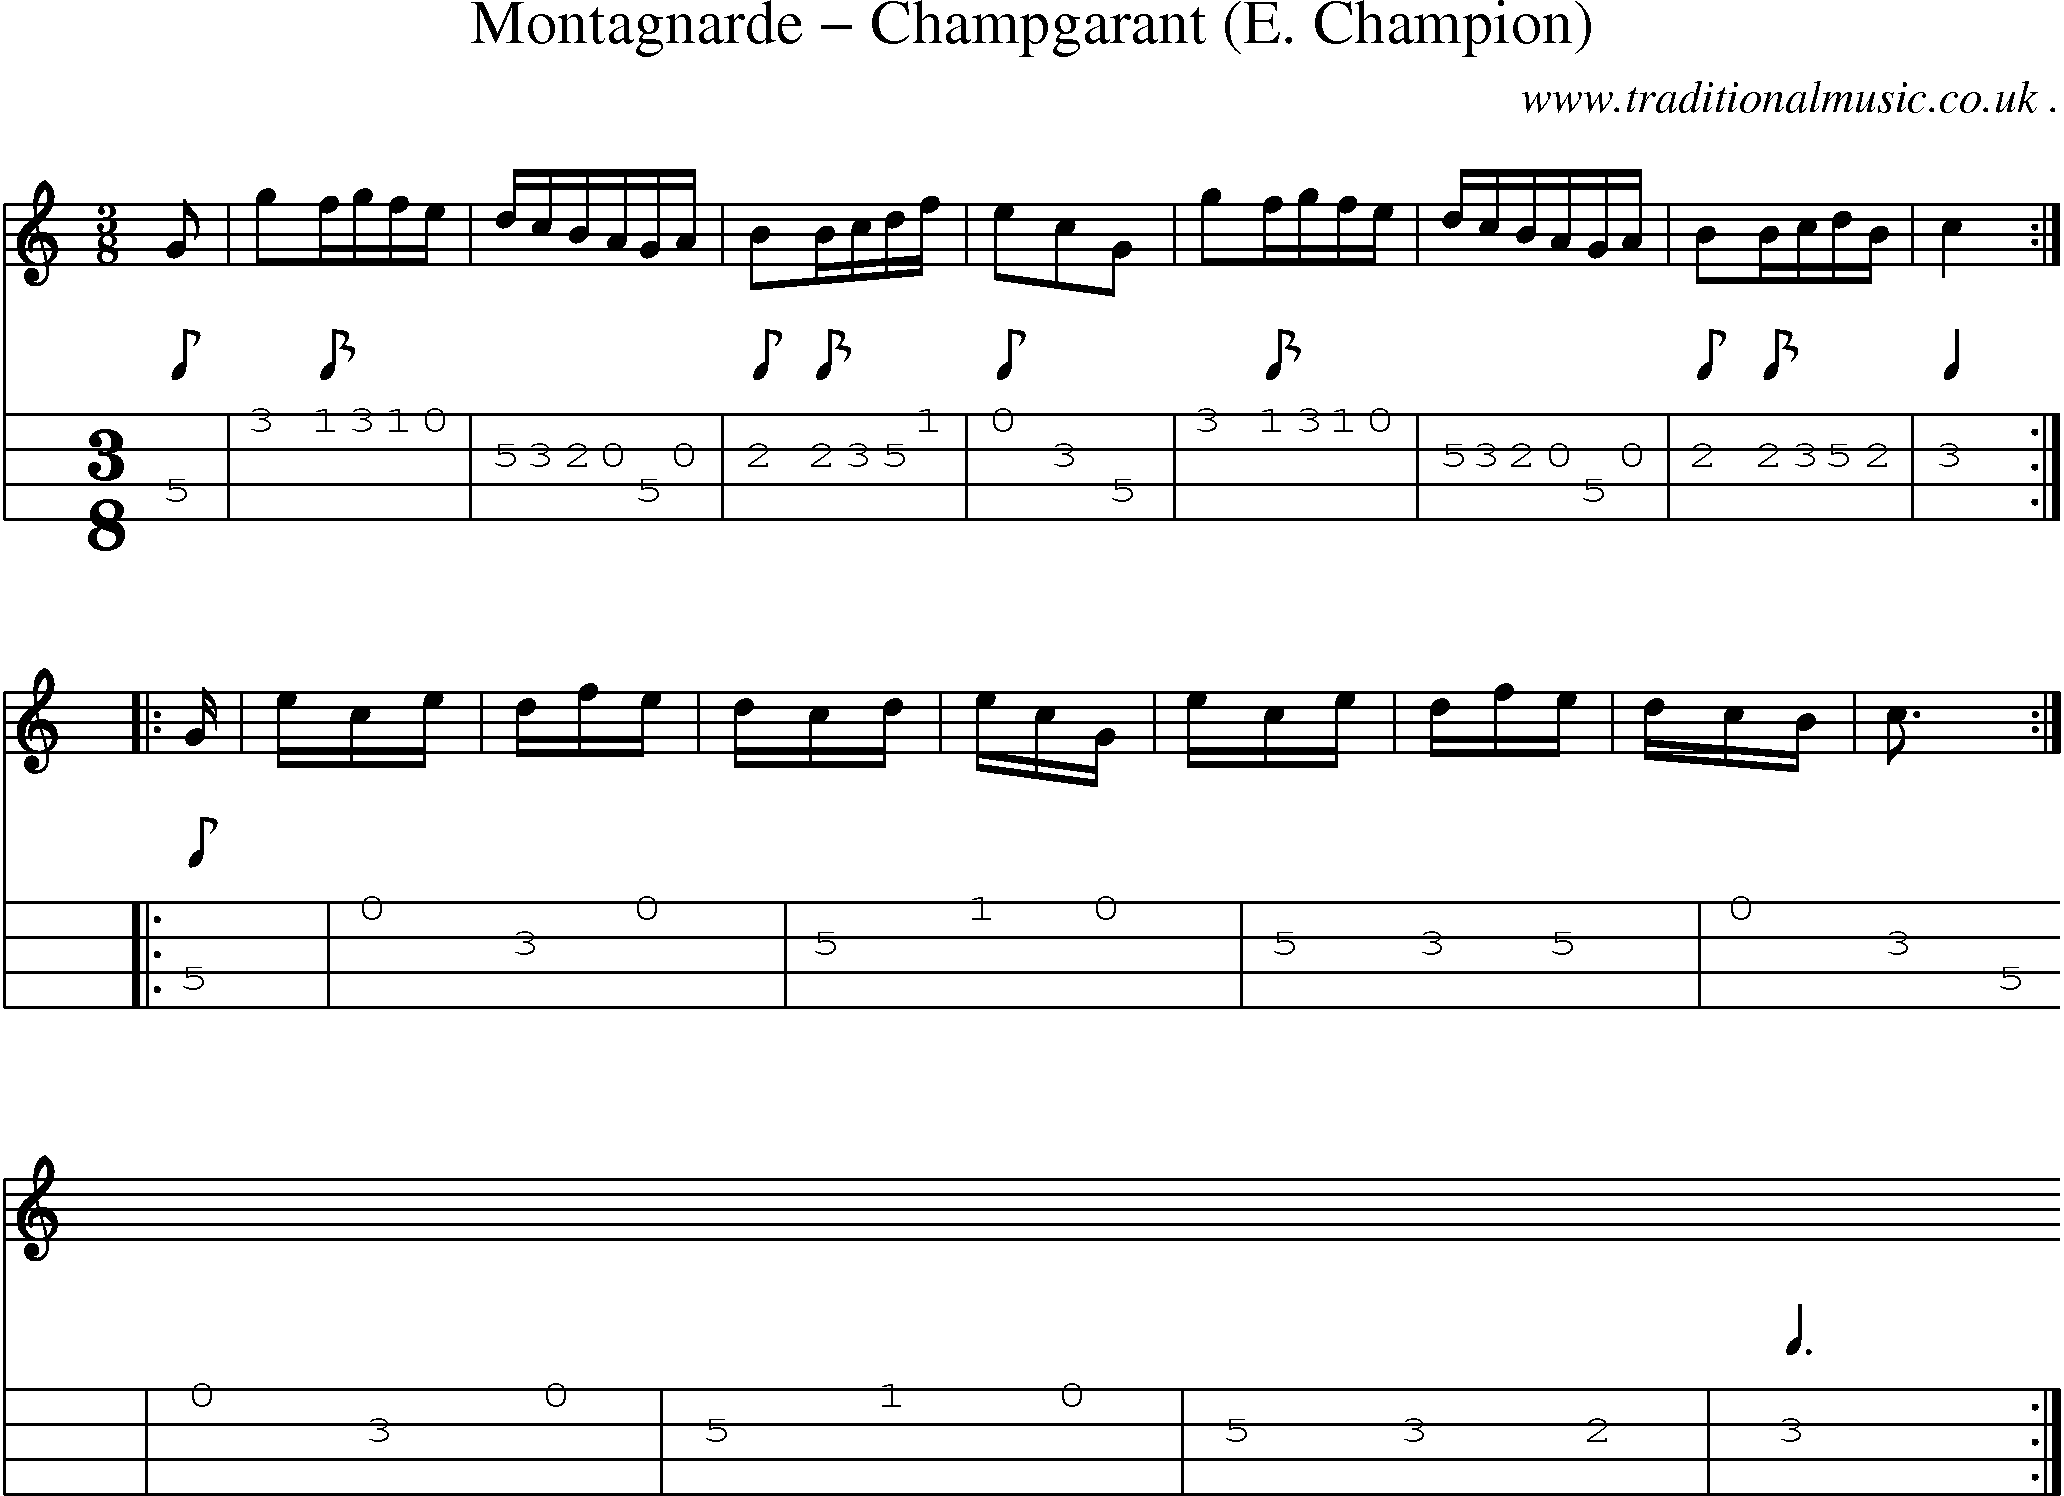 Sheet-Music and Mandolin Tabs for Montagnarde Champgarant (e Champion)